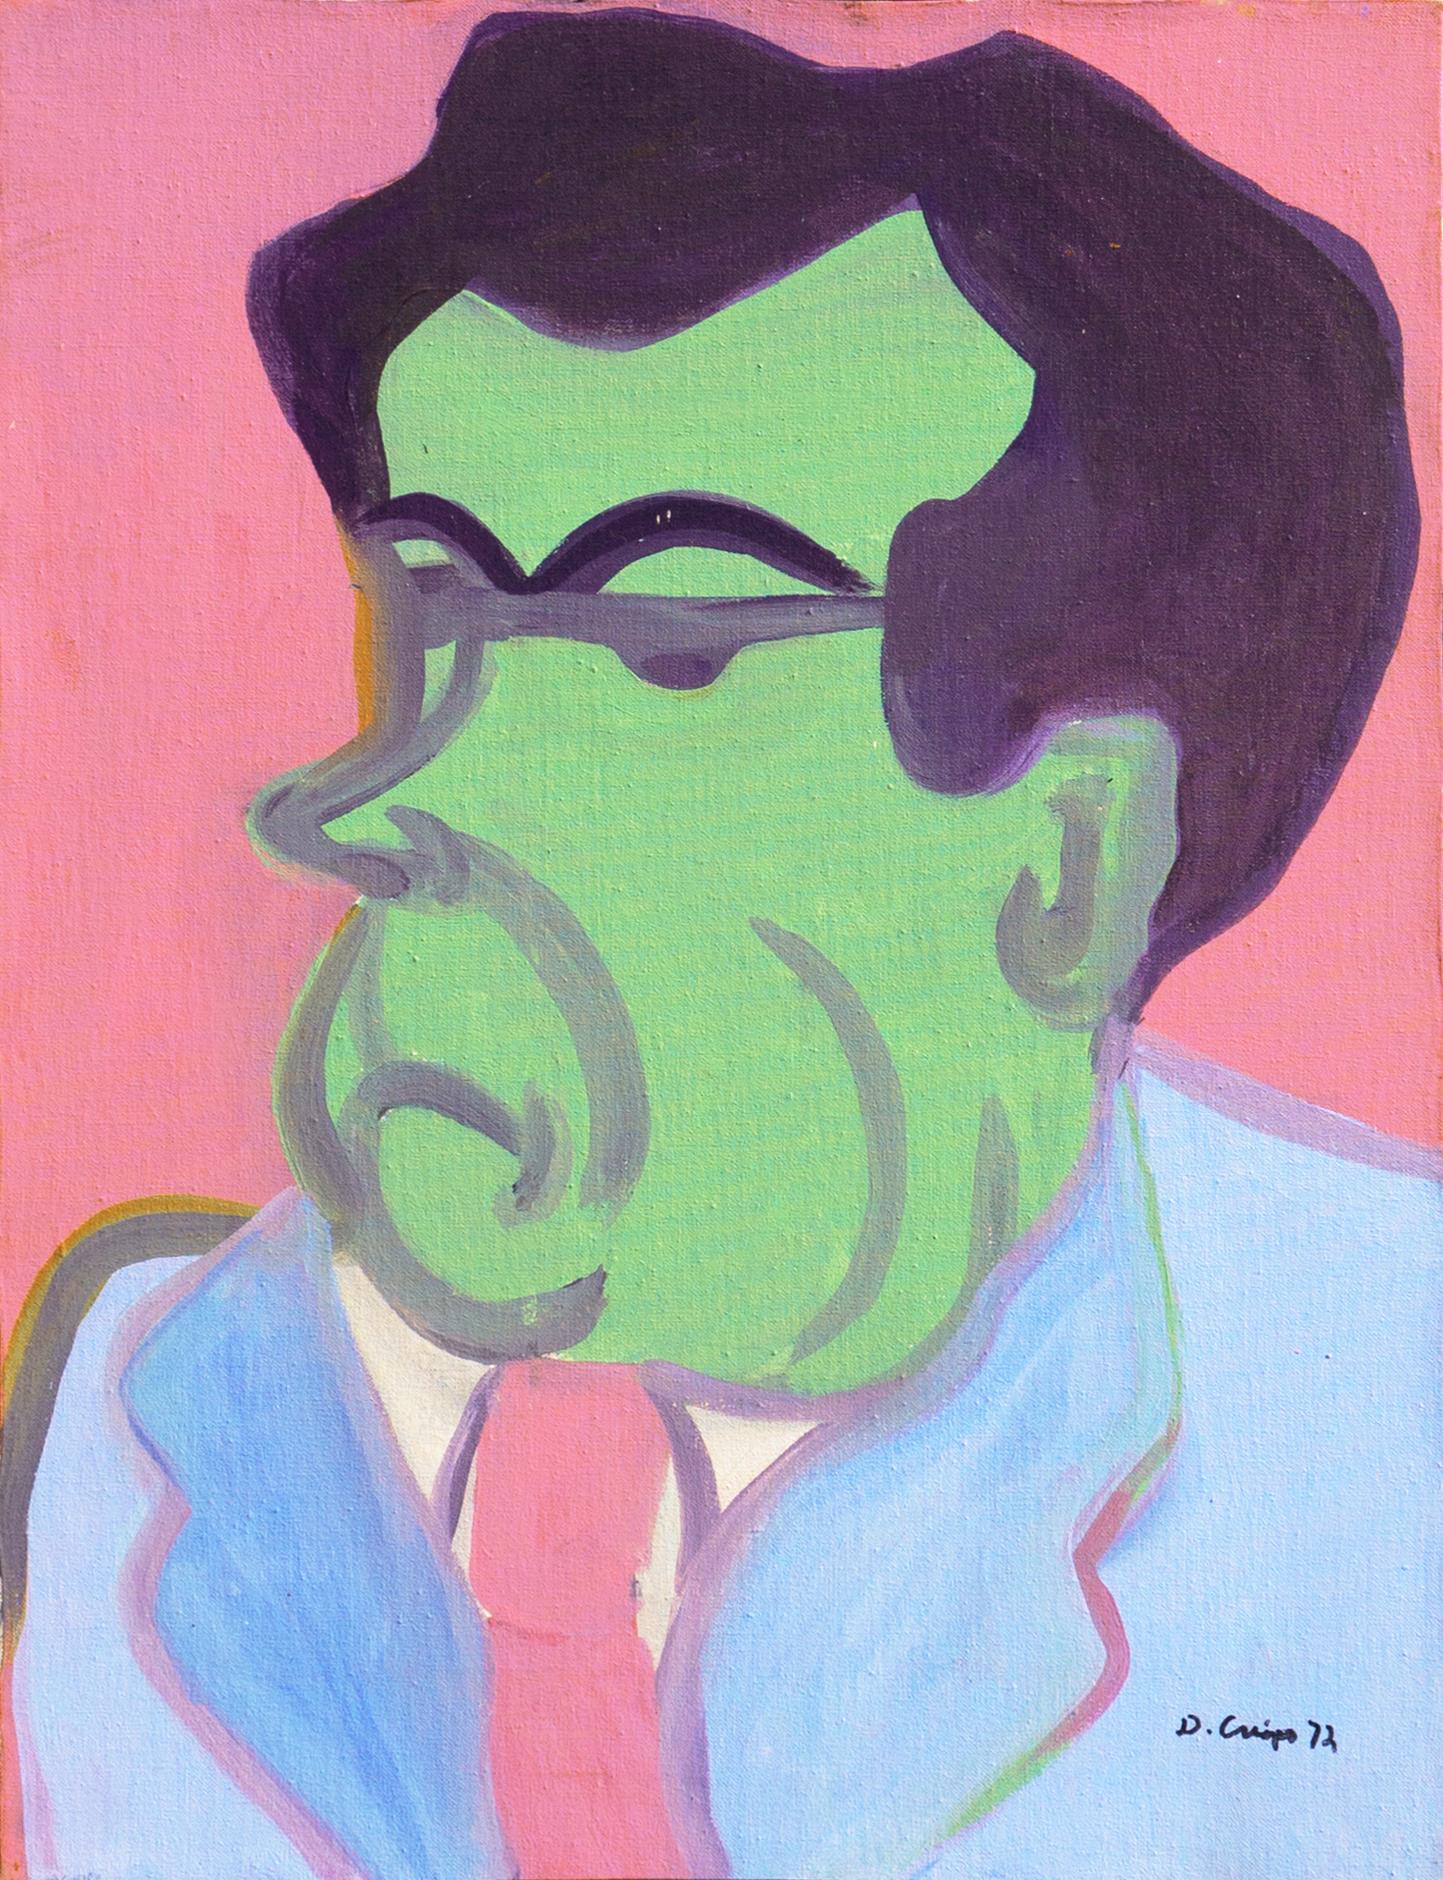 Dick Crispo Portrait Painting - 'Richard Milhouse Nixon', Carmel Art Association, Oakland Art Museum, Monterey